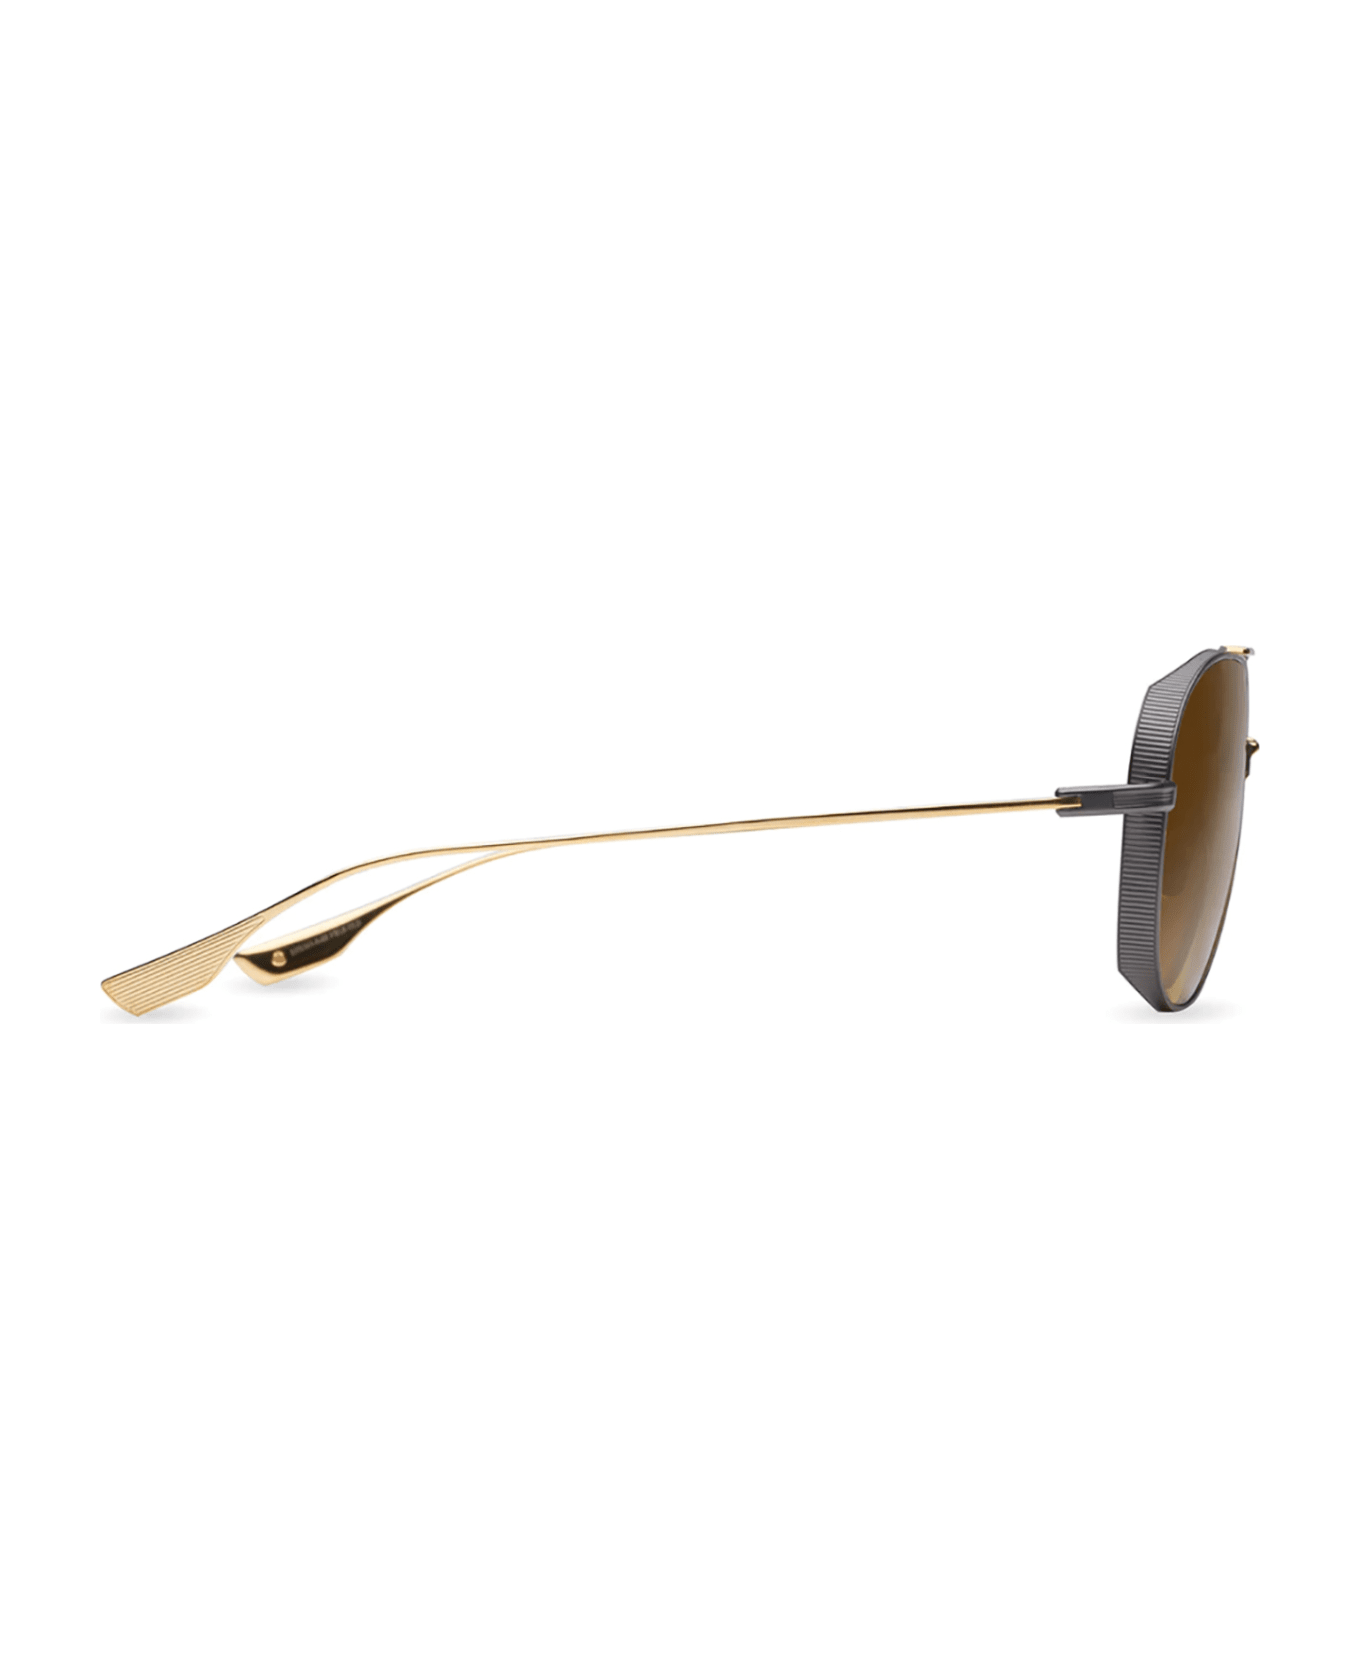 Dita DTS141/A/02 SUBSYSTEM Sunglasses - Black Iron サングラス